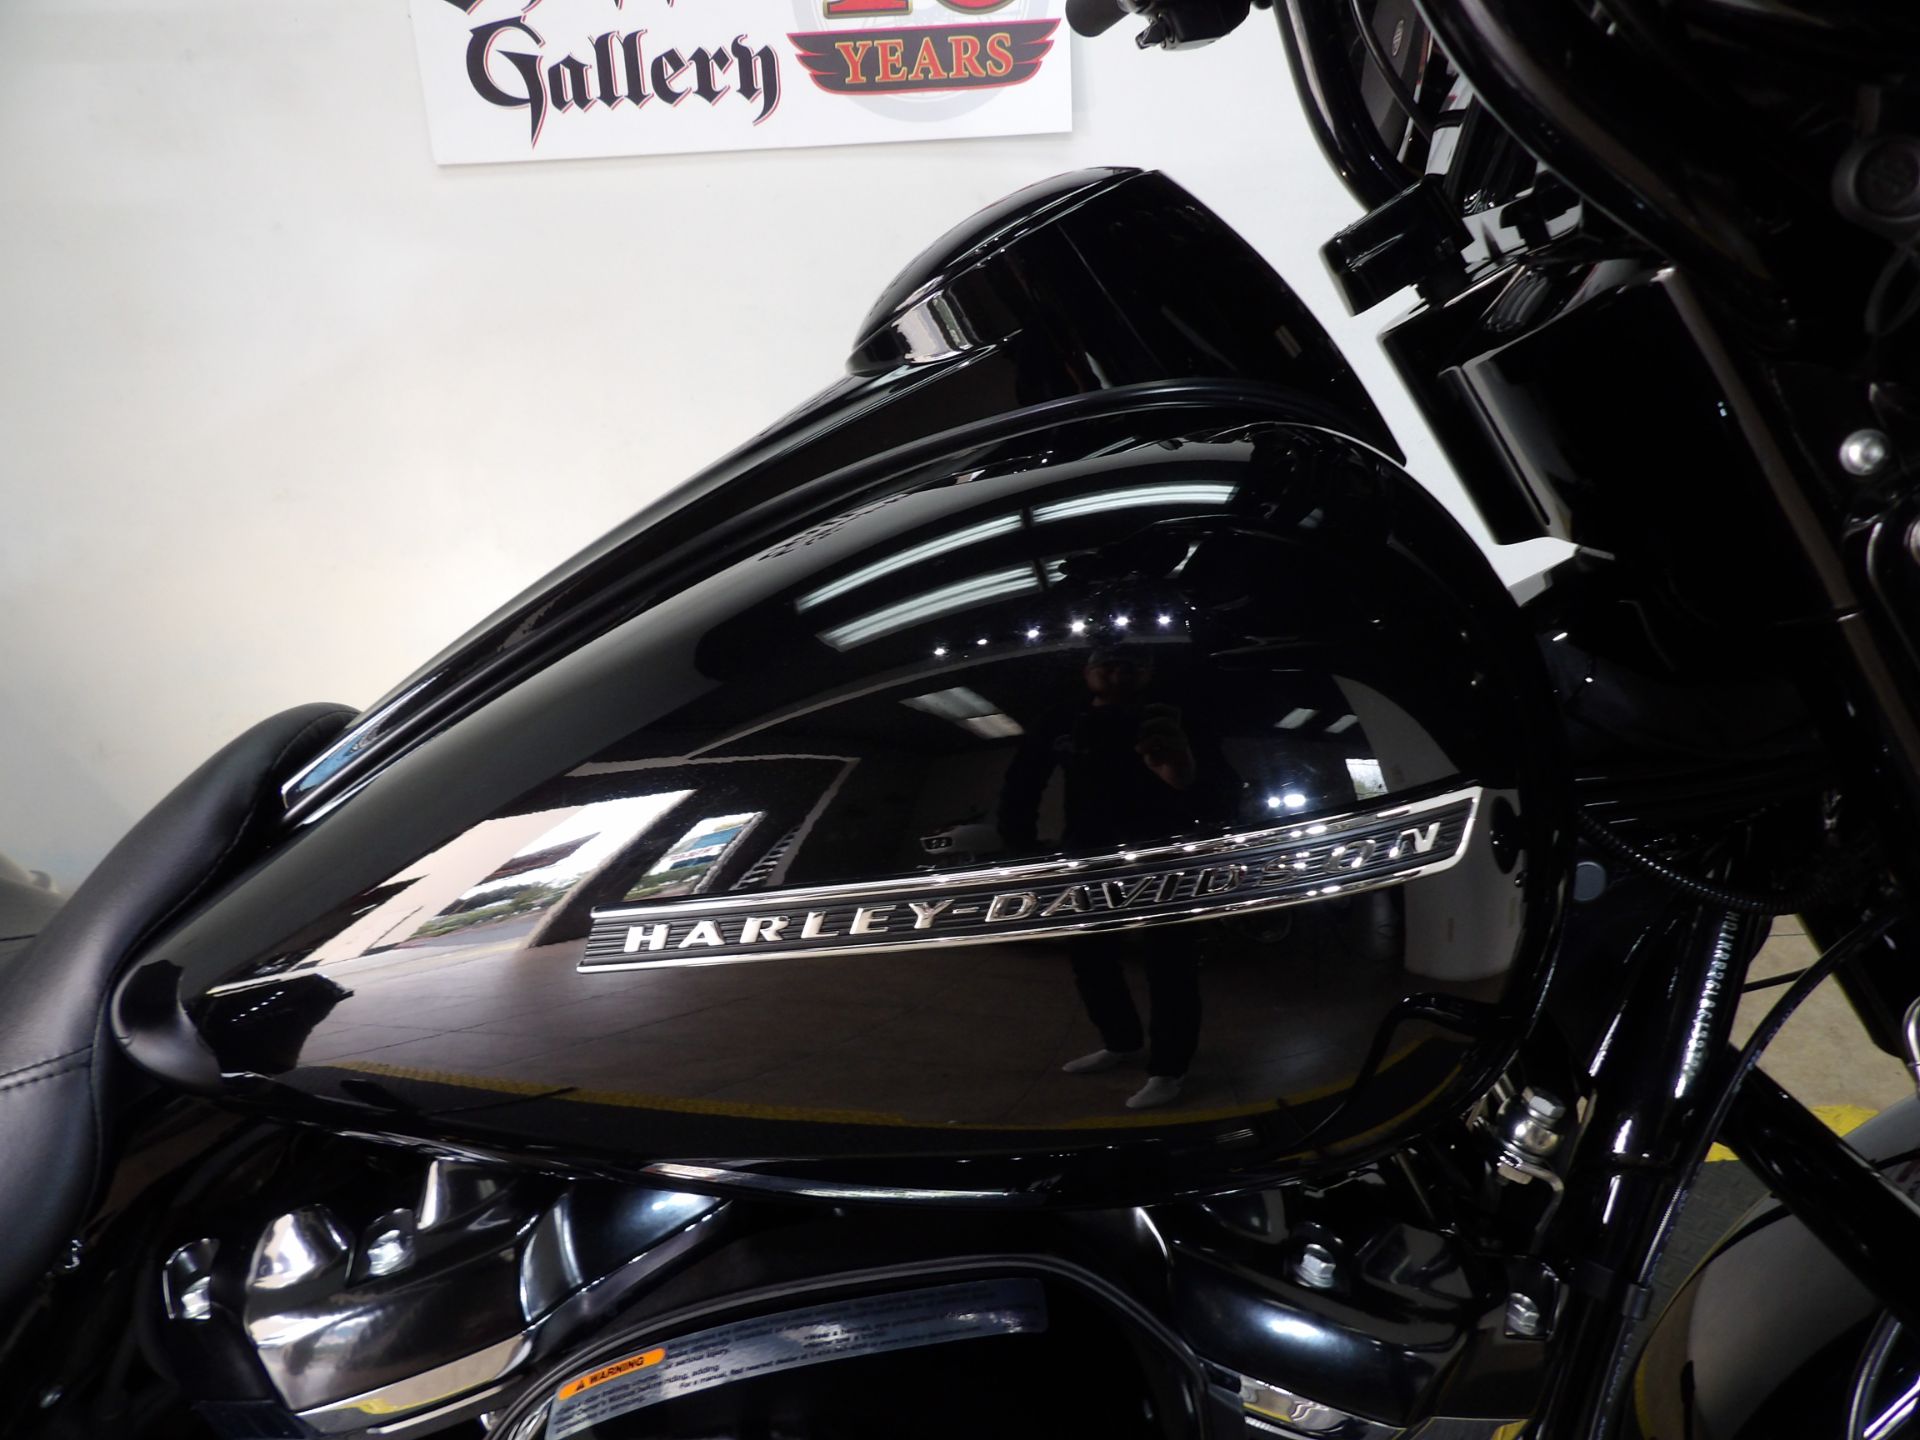 2020 Harley-Davidson Street Glide® Special in Temecula, California - Photo 11